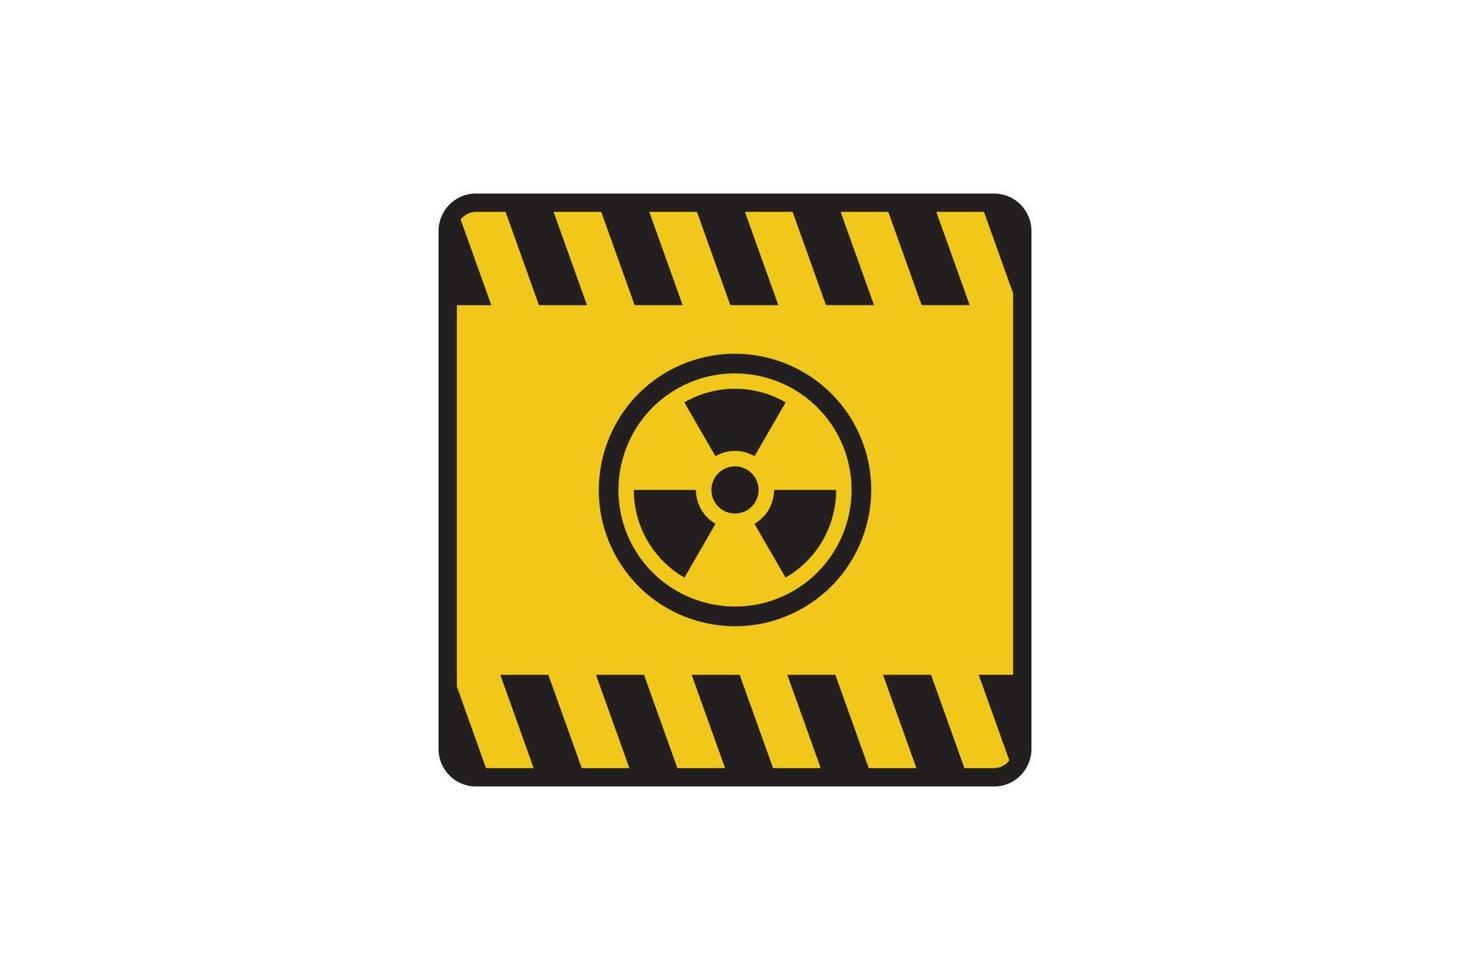 nucleair straling waarschuwing teken icoon vector ontwerp